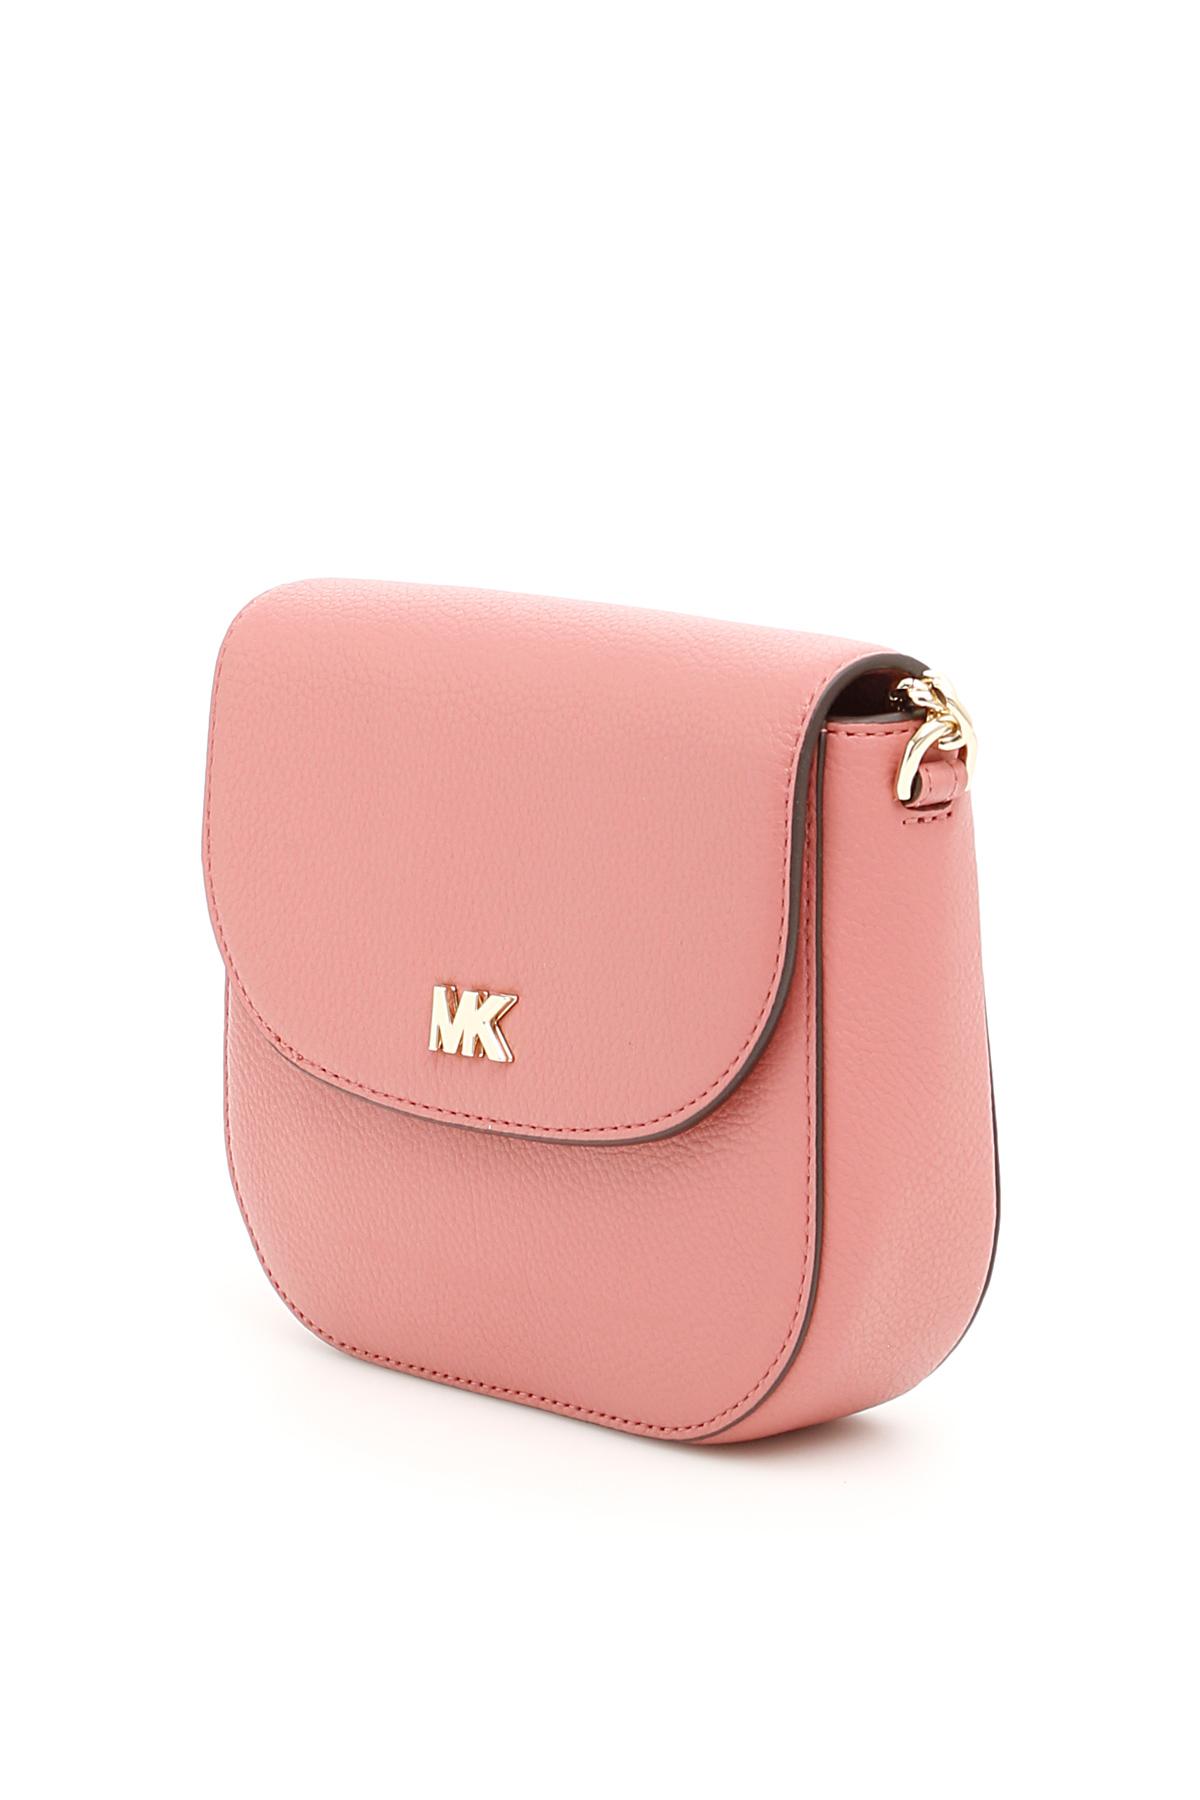 MICHAEL Michael Kors Mott Crossbody Bag in Rose (Pink) - Lyst